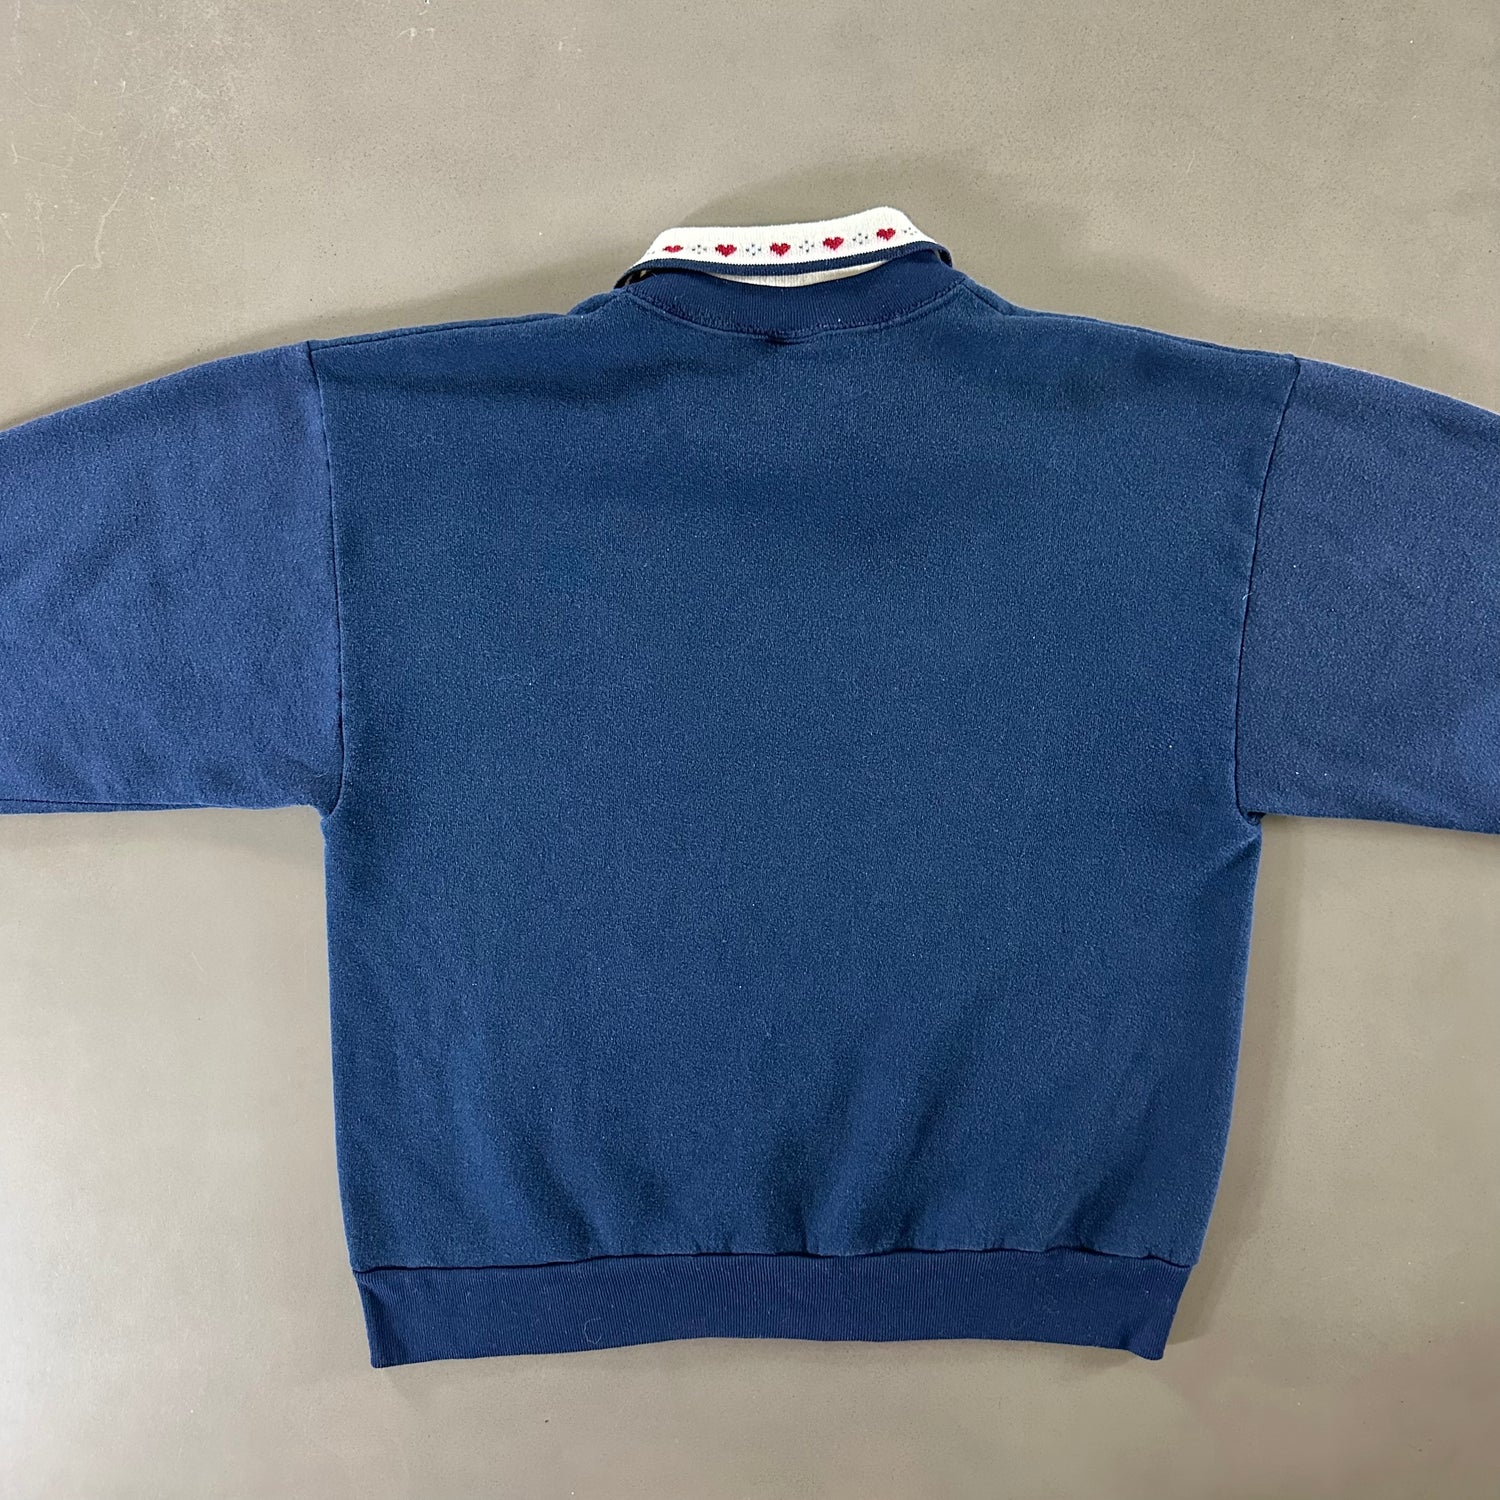 Vintage 1990s Heart Sweatshirt size Large